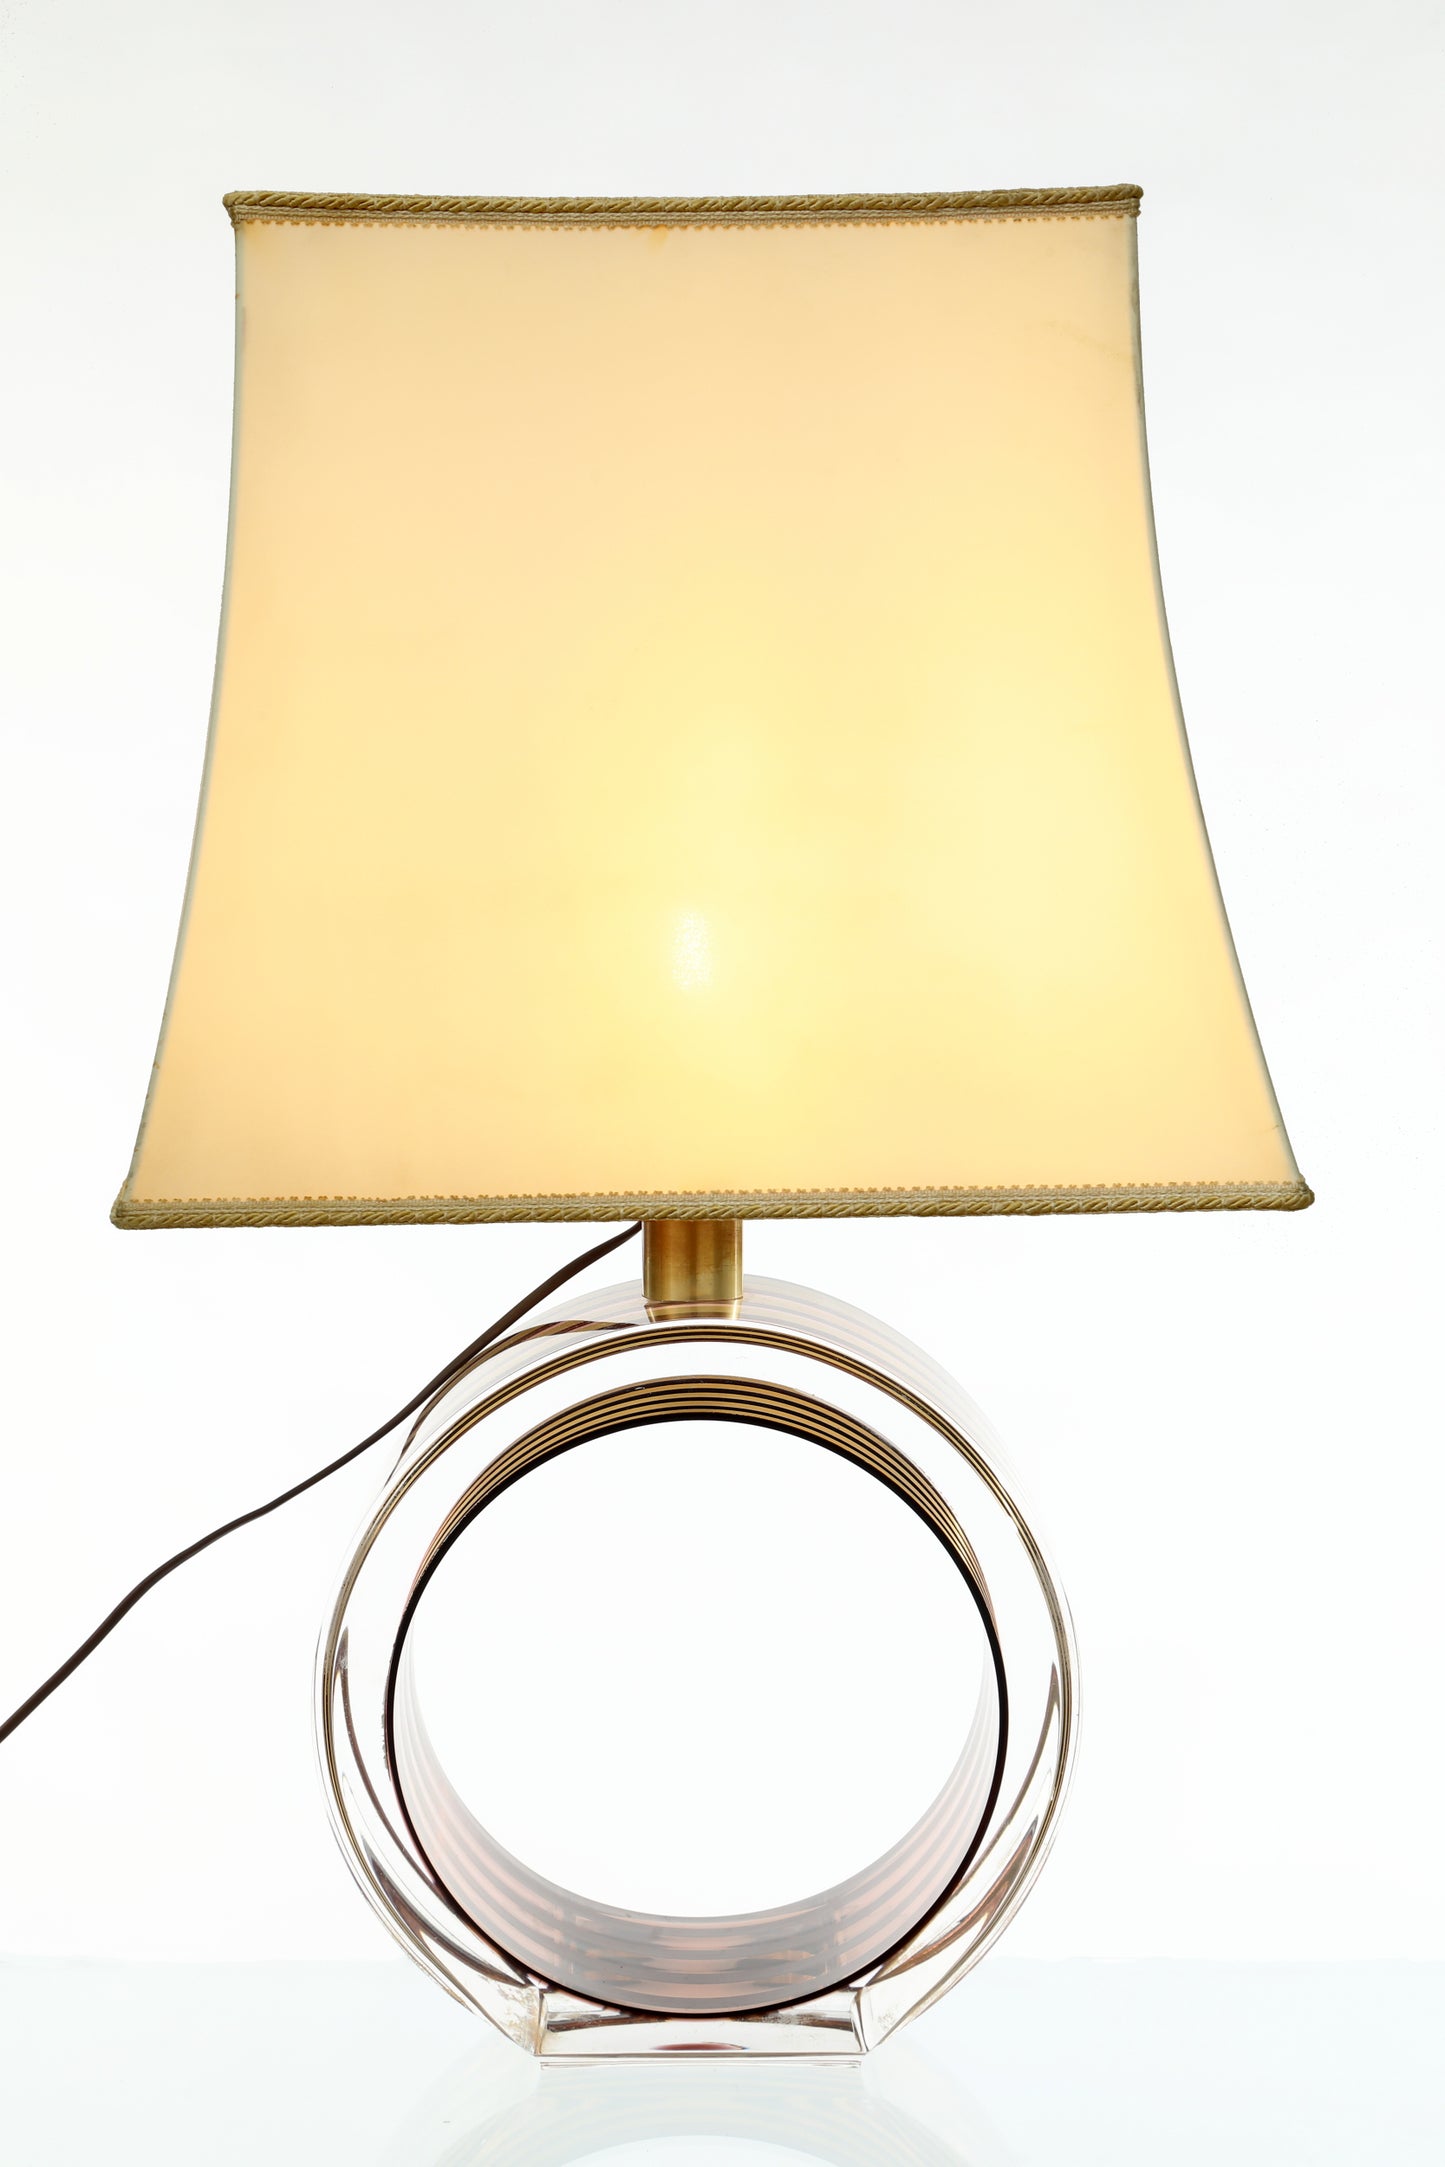 70s plexiglass lamp